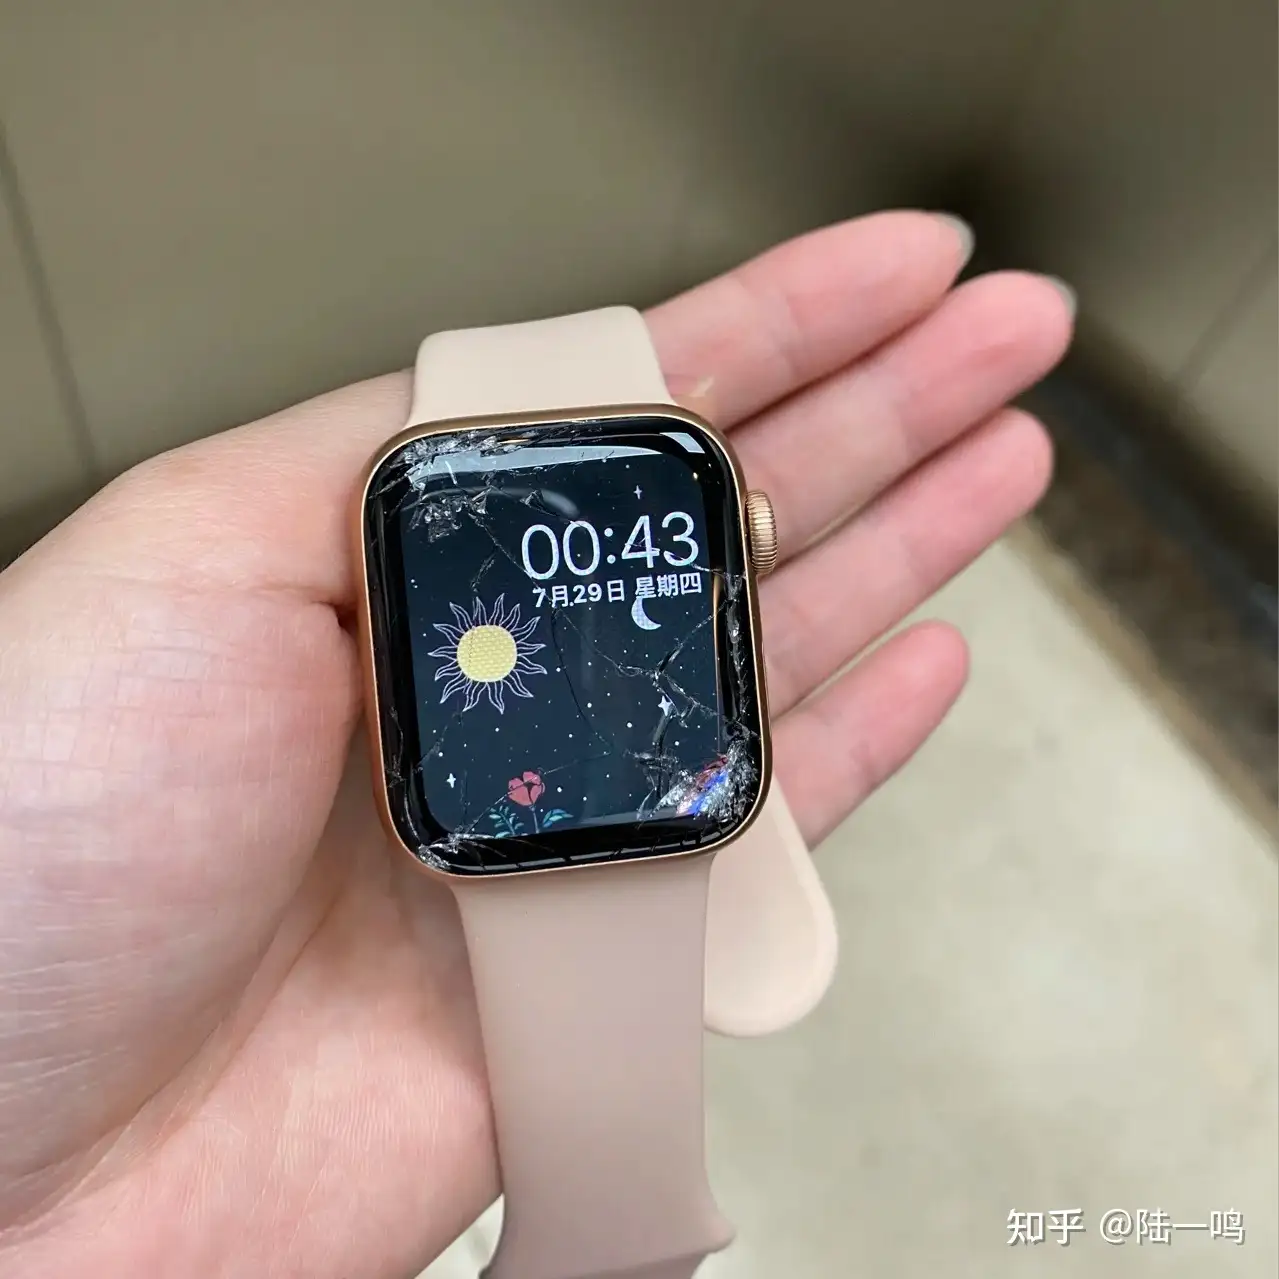 Apple watch购买了ac+，表面有划痕是否能换新？ - 知乎